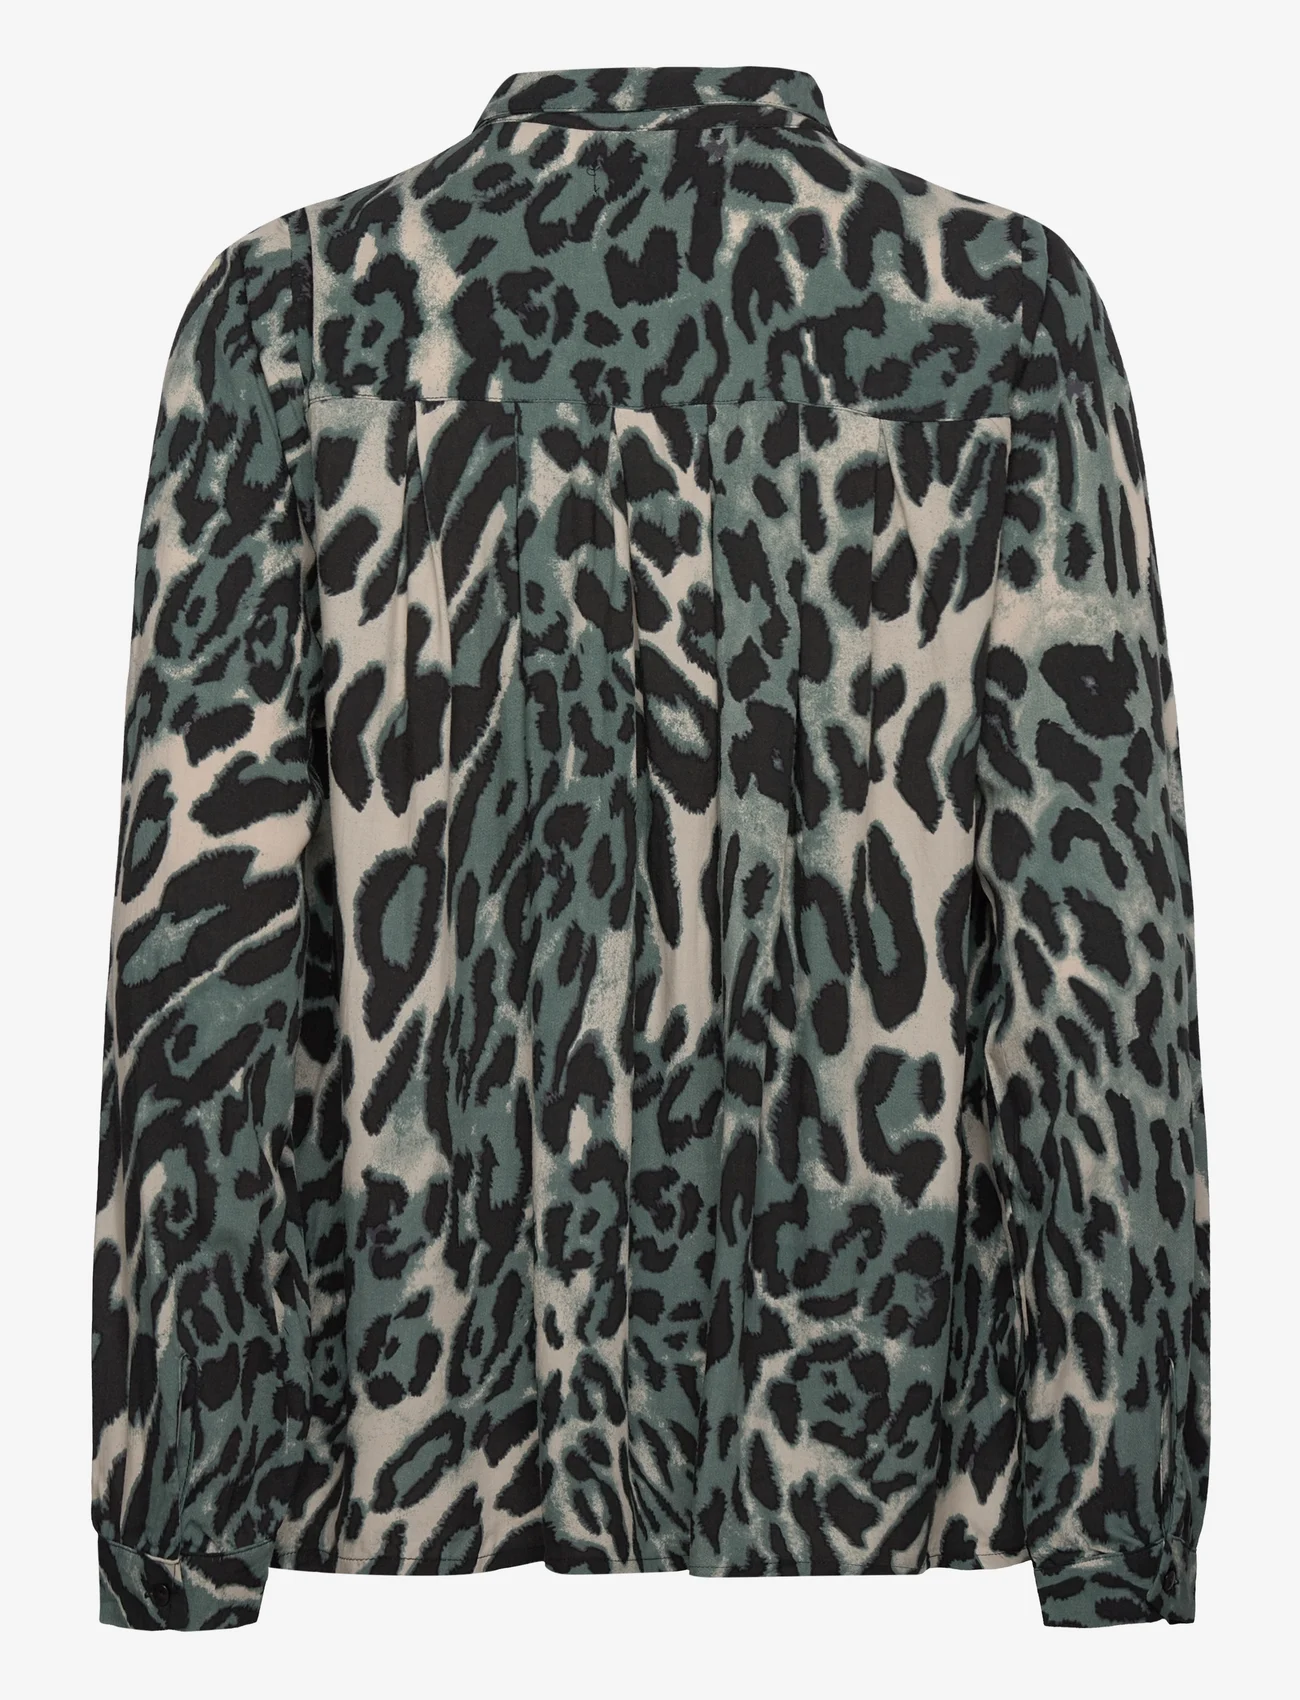 Lollys Laundry - Lari Shirt - marškiniai ilgomis rankovėmis - leopard print - 1